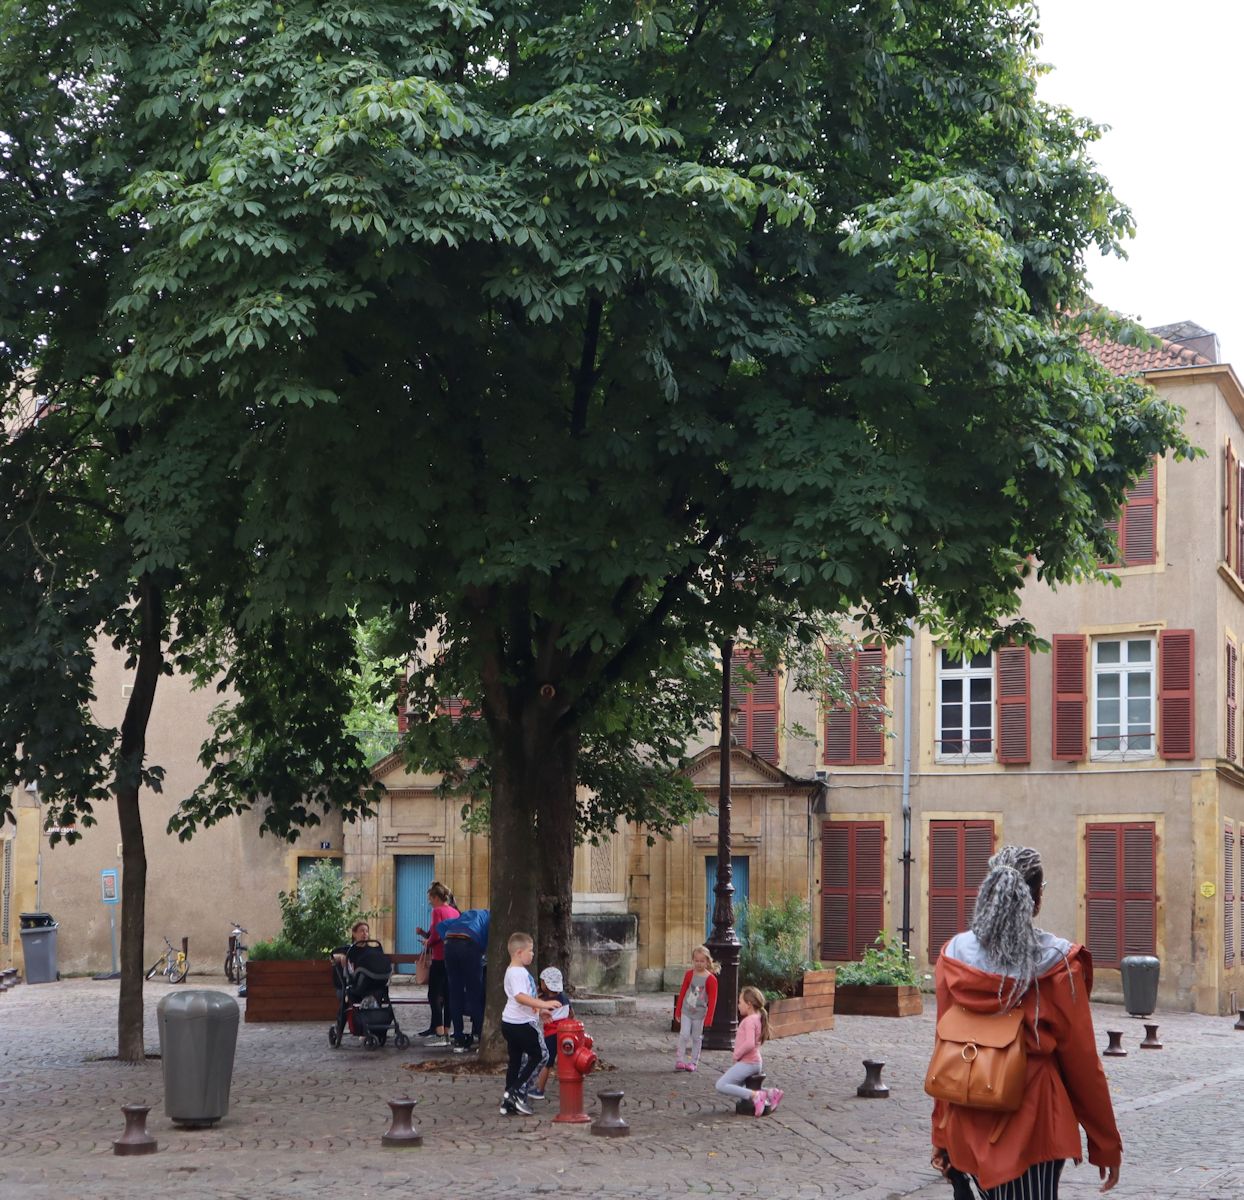 Place Sainte-Croix in Metz